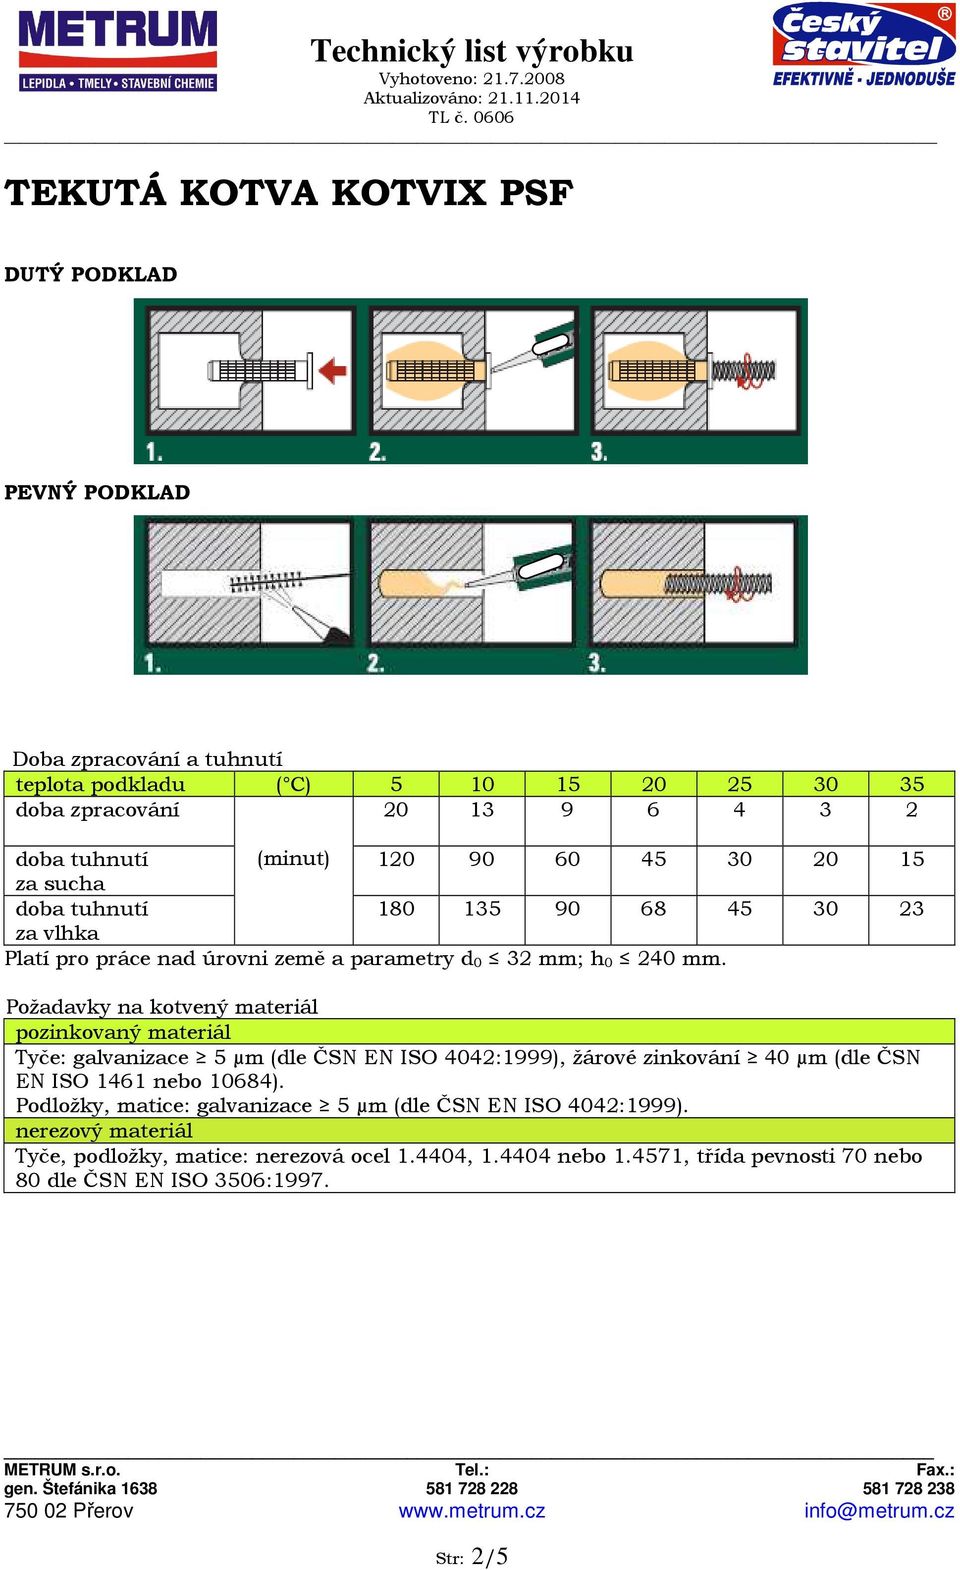 Požadavky na kotvený materiál pozinkovaný materiál Tyče: galvanizace 5 µm (dle ČSN EN ISO 4042:1999), žárové zinkování 40 µm (dle ČSN EN ISO 1461 nebo 10684).